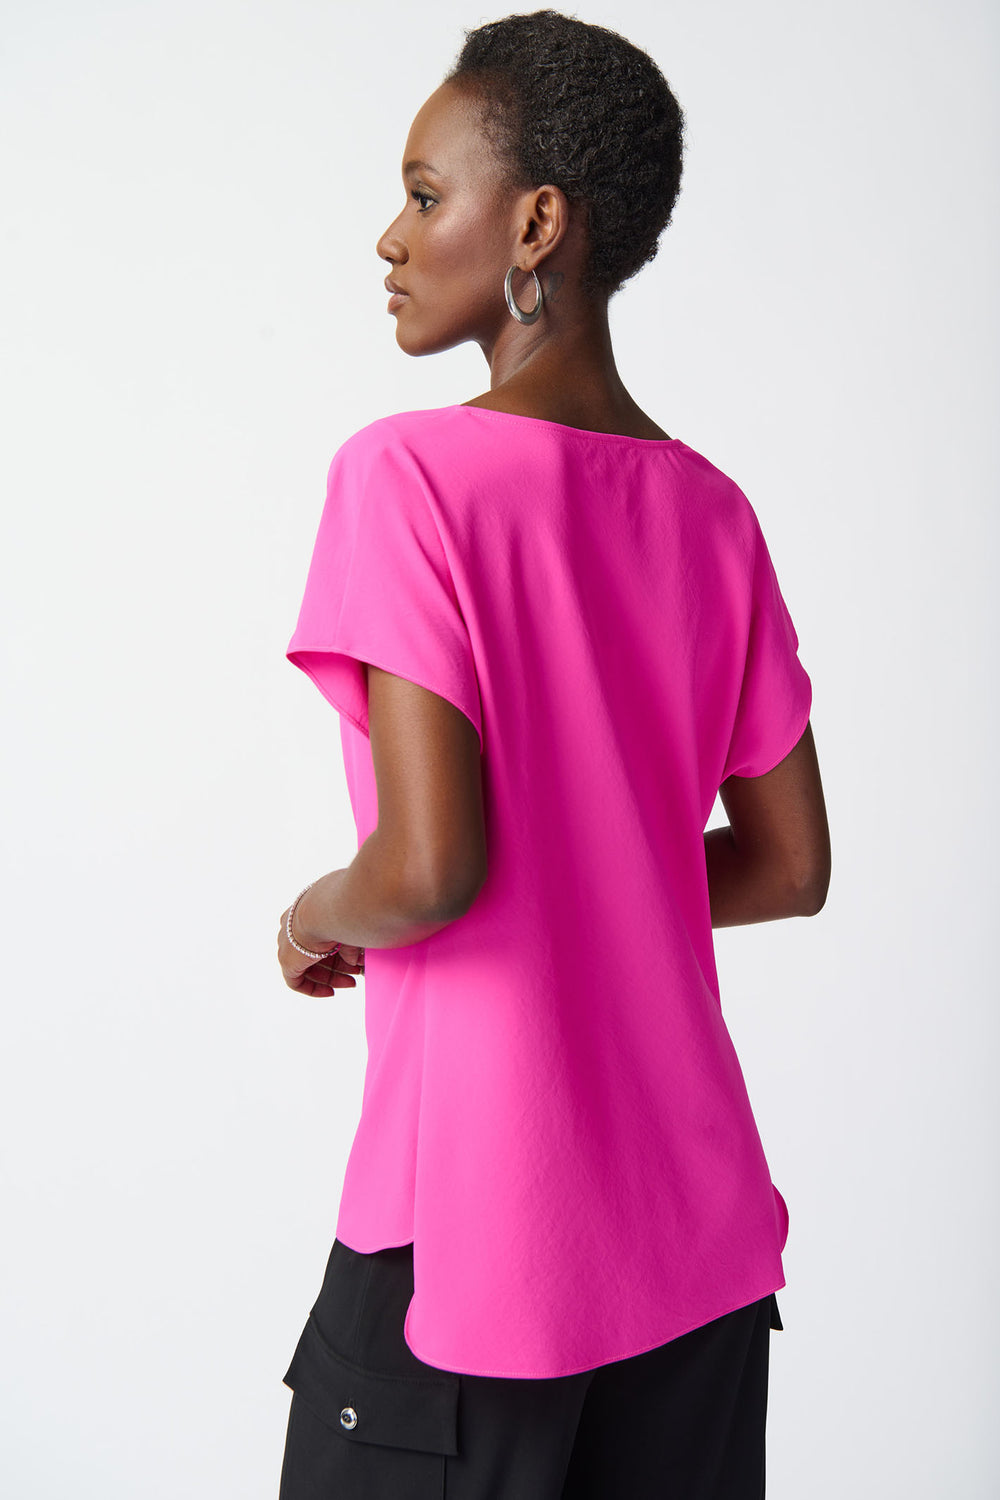 Joseph Ribkoff 241099 Ultra Pink Cowl Neck Top - Olivia Grace Fashion